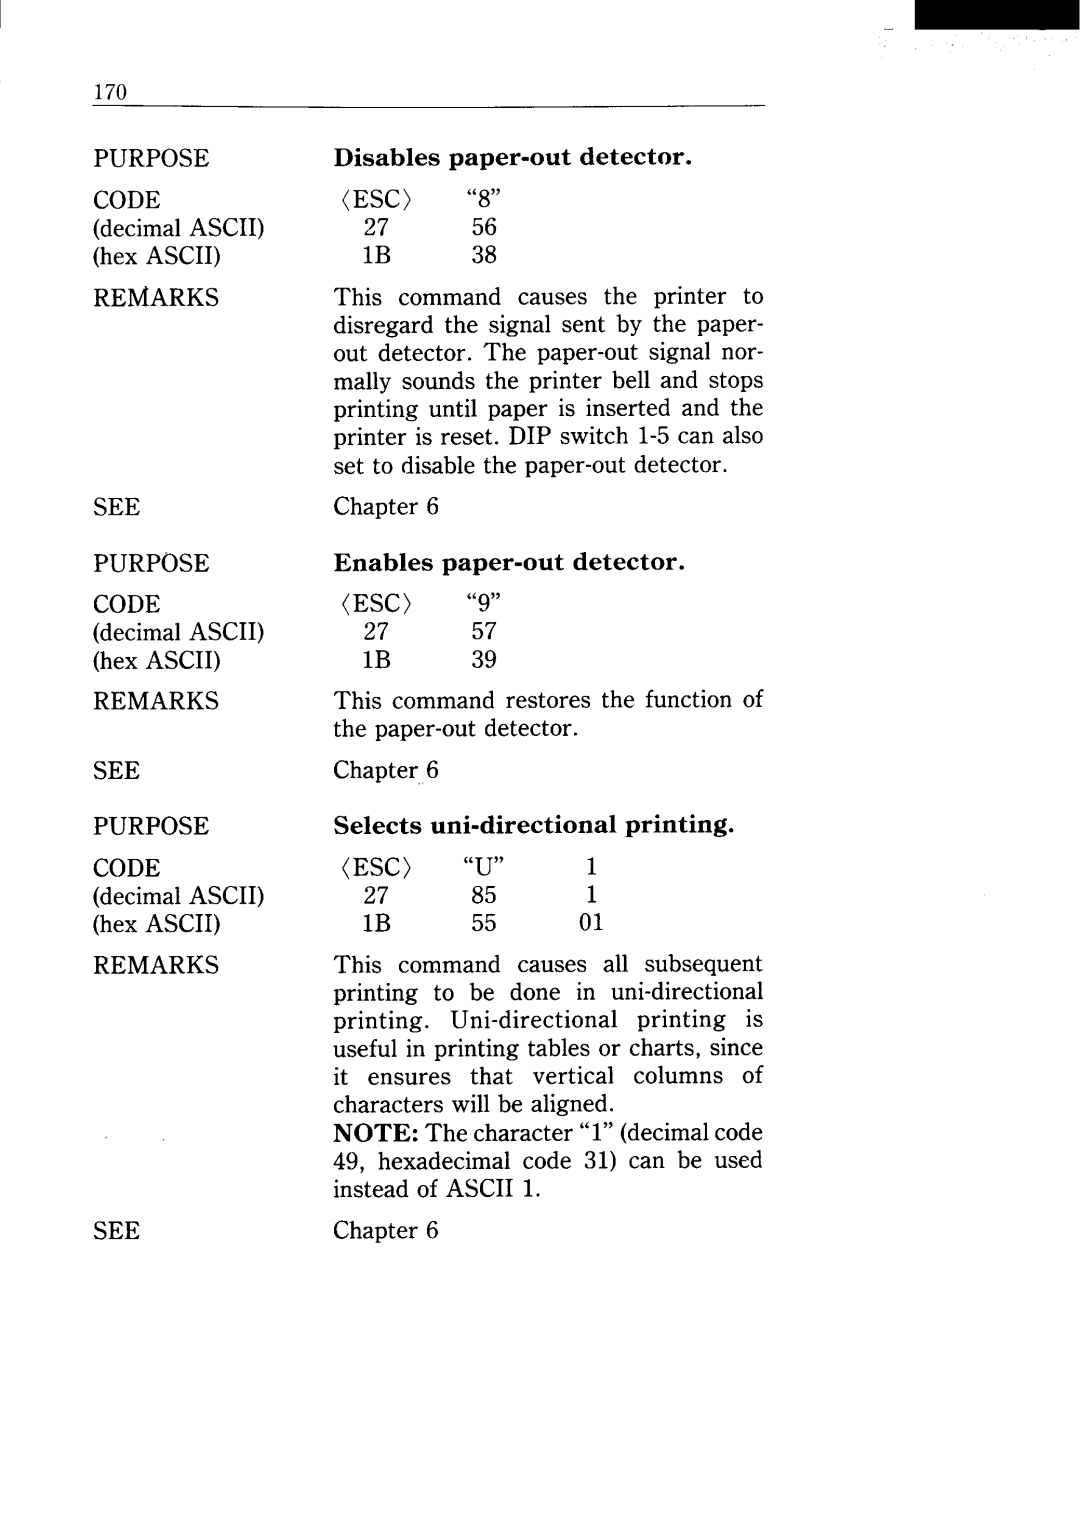 Star Micronics NX-15 user manual 27 85, Purpose 